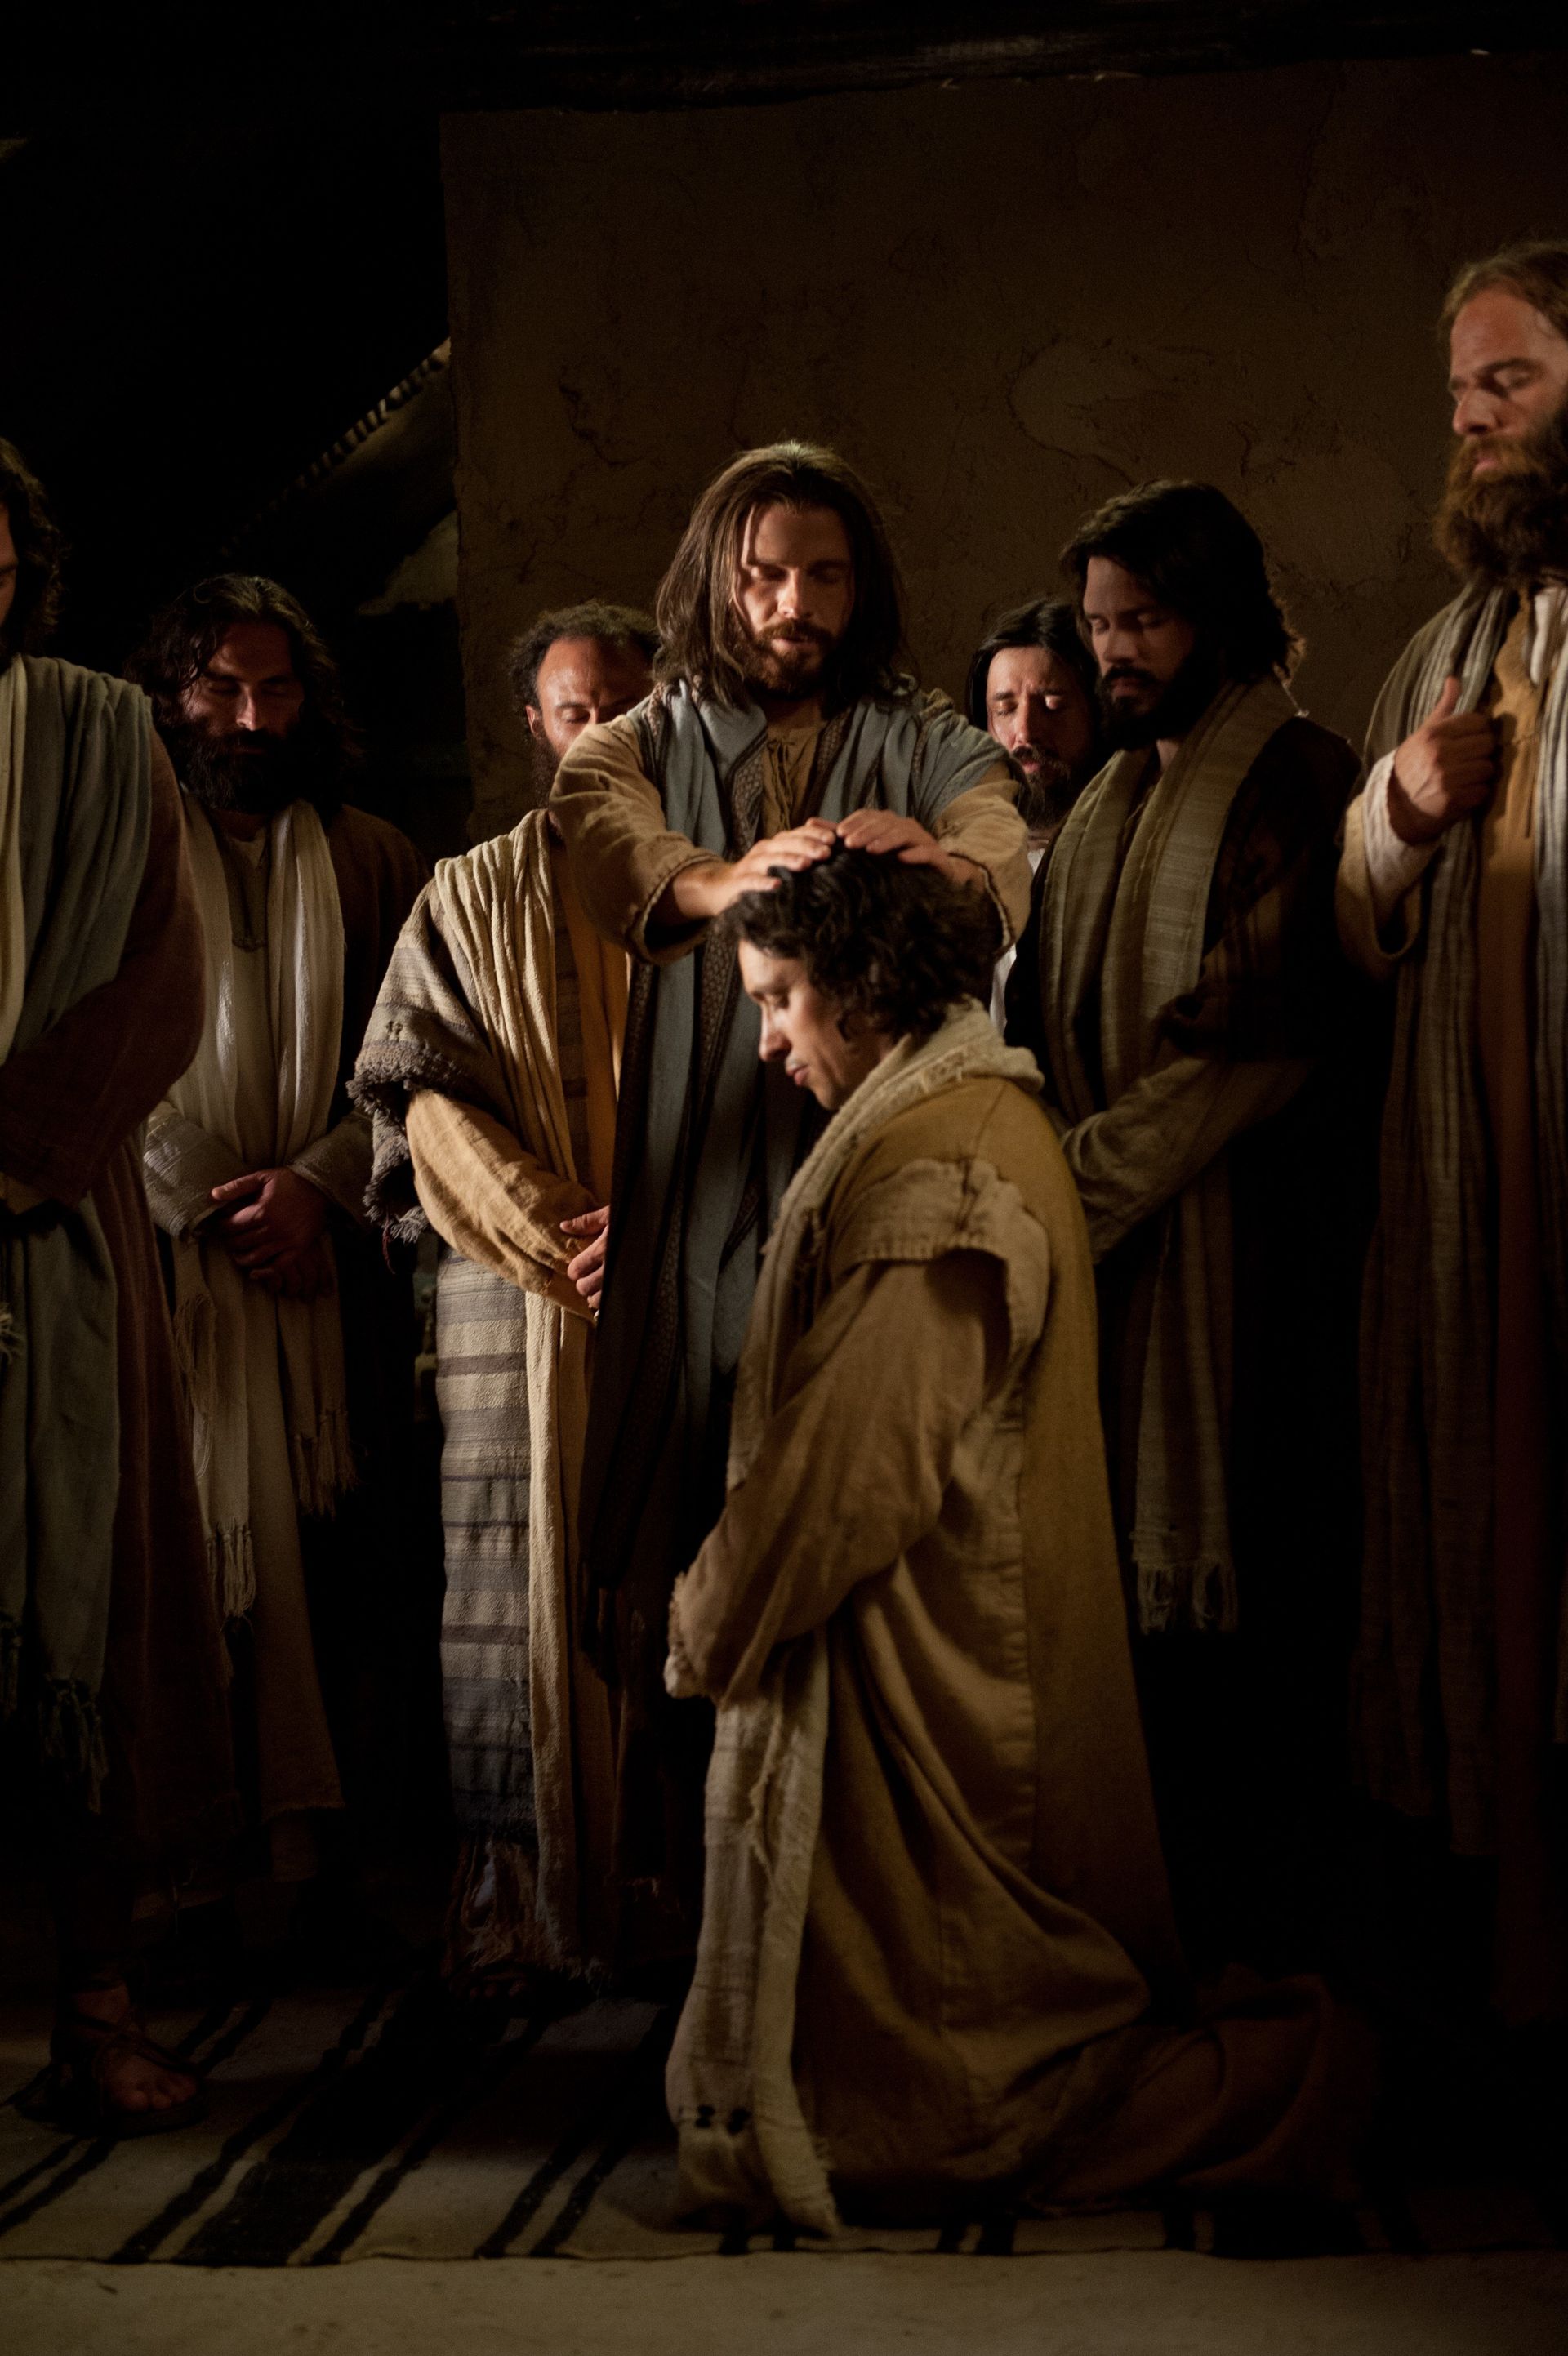 Christ ordaining John as an Apostle.